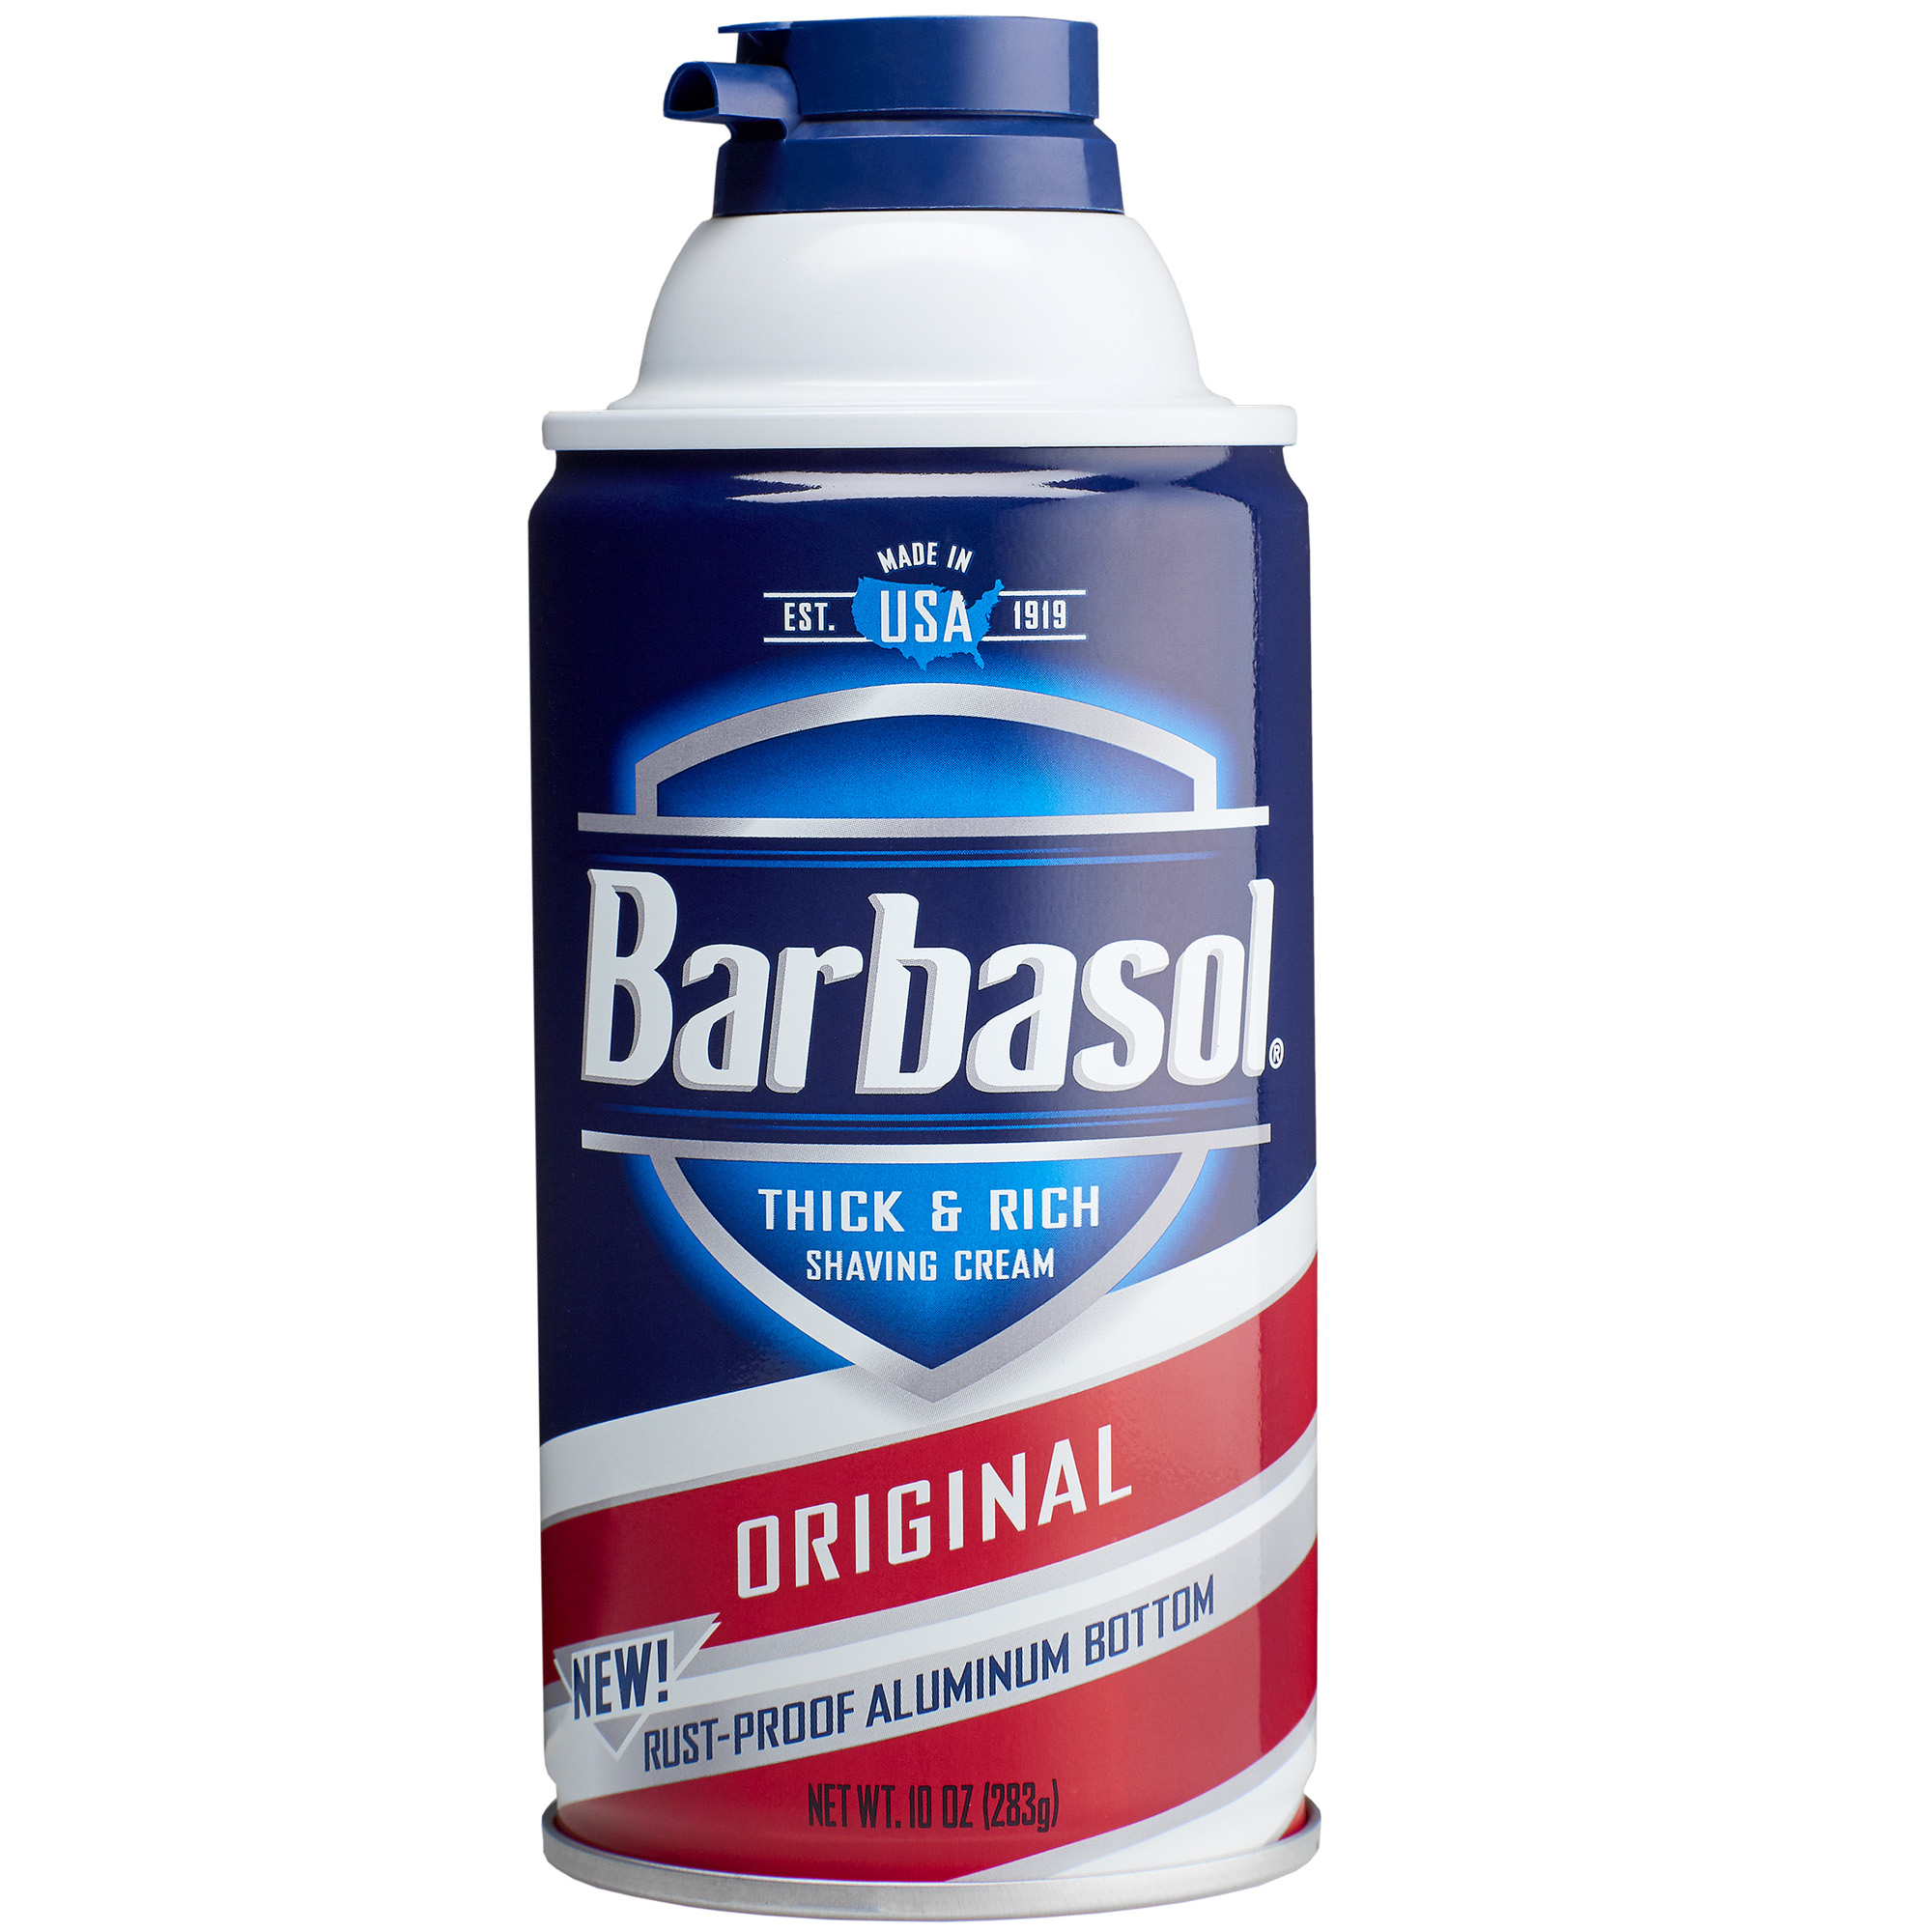 Barbasol Original Thick & Rich Shaving Cream for Men, 10 Oz. - image 1 of 5